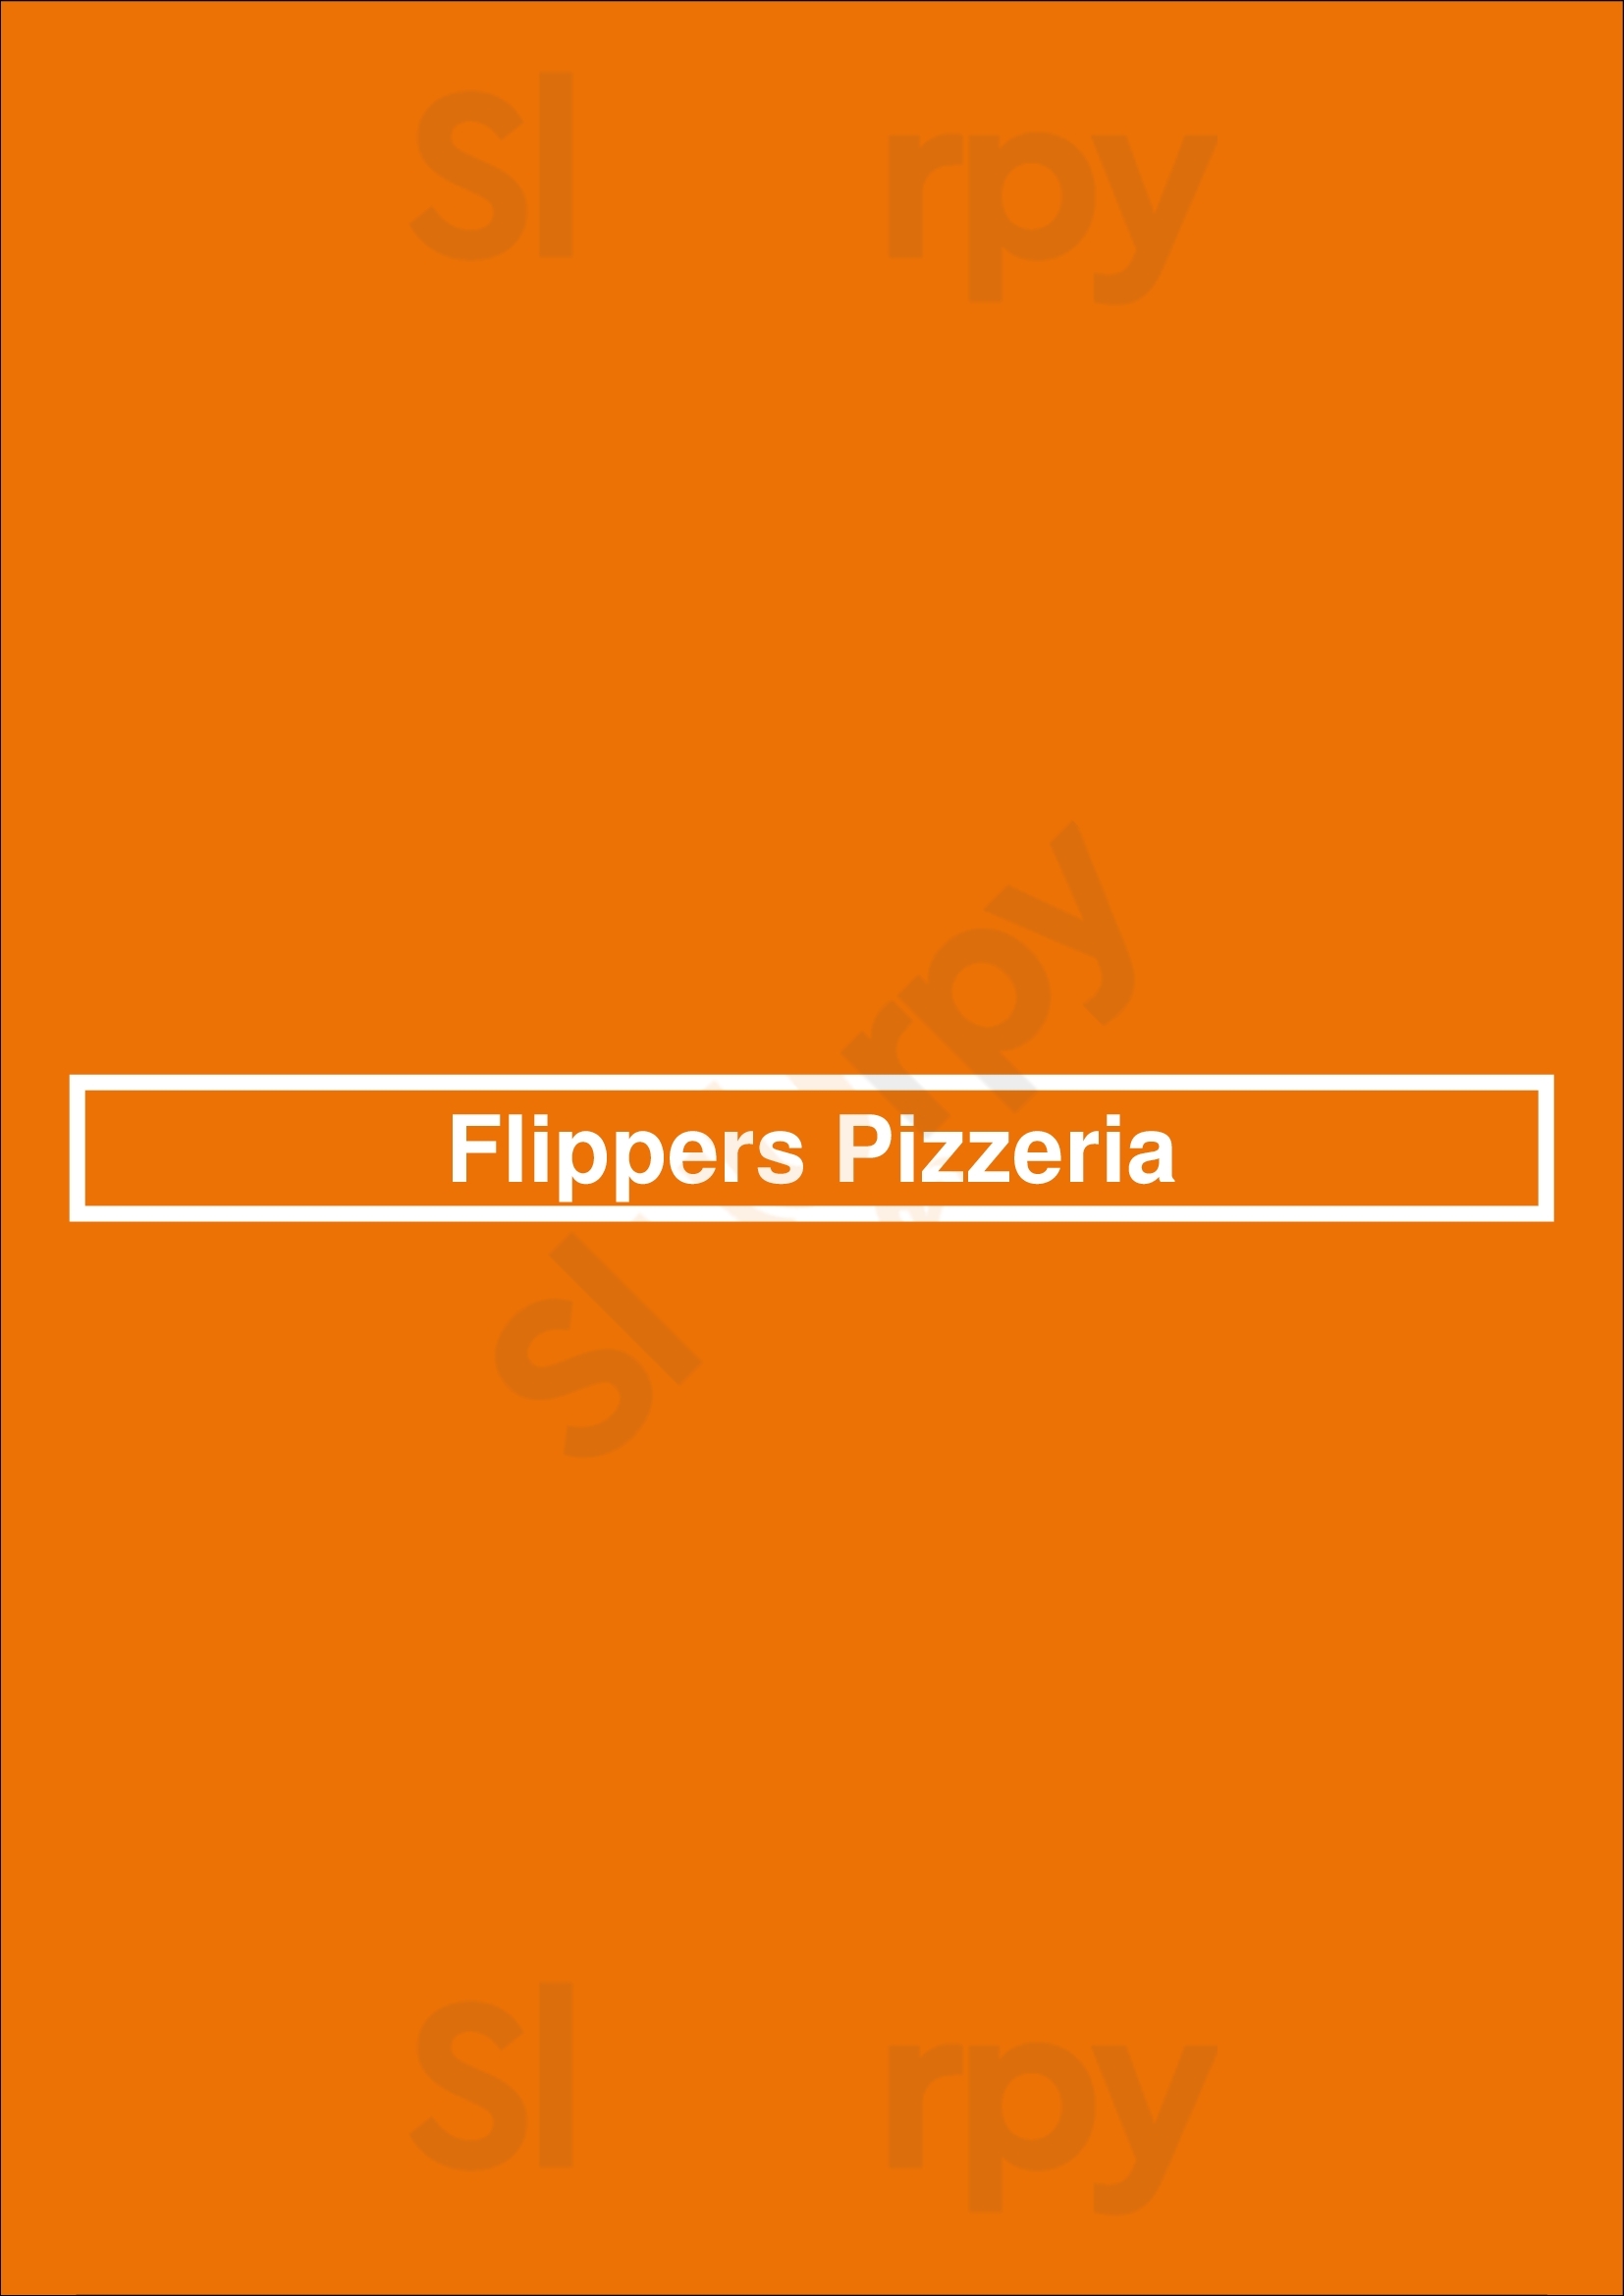 Flippers Pizzeria Orlando Menu - 1